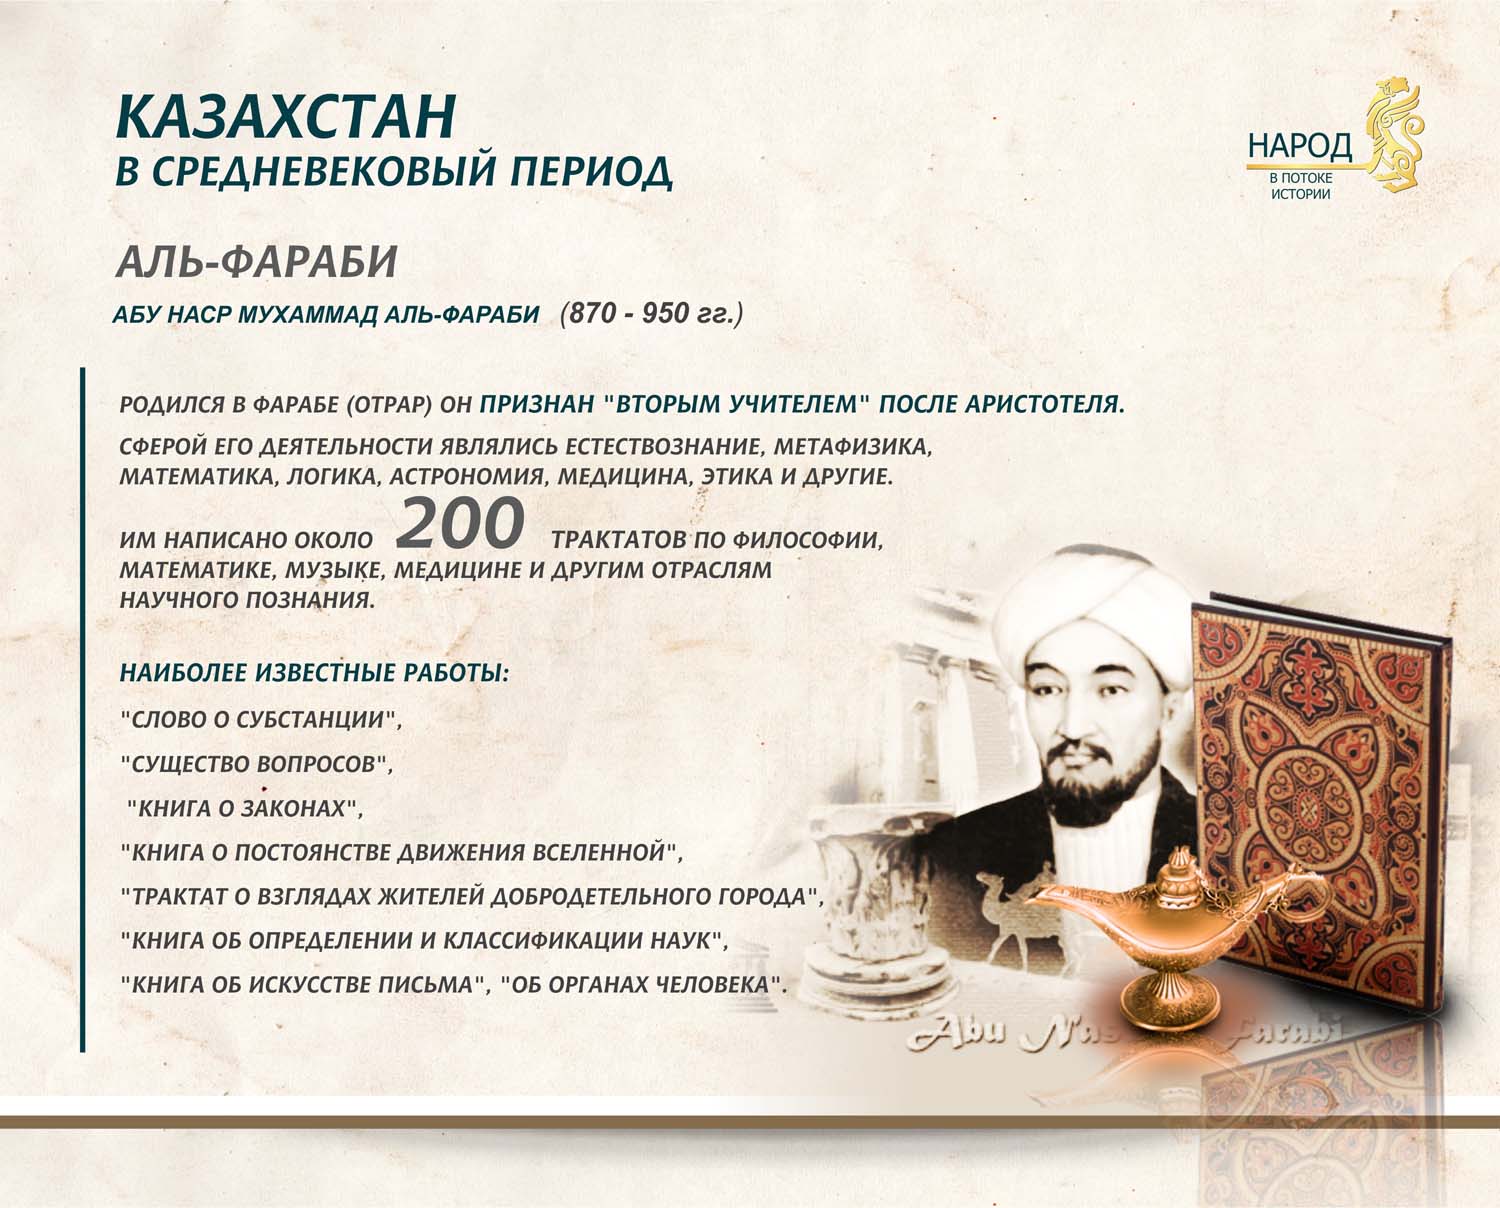 Kazakhstan in medieval period - Al-Farabi